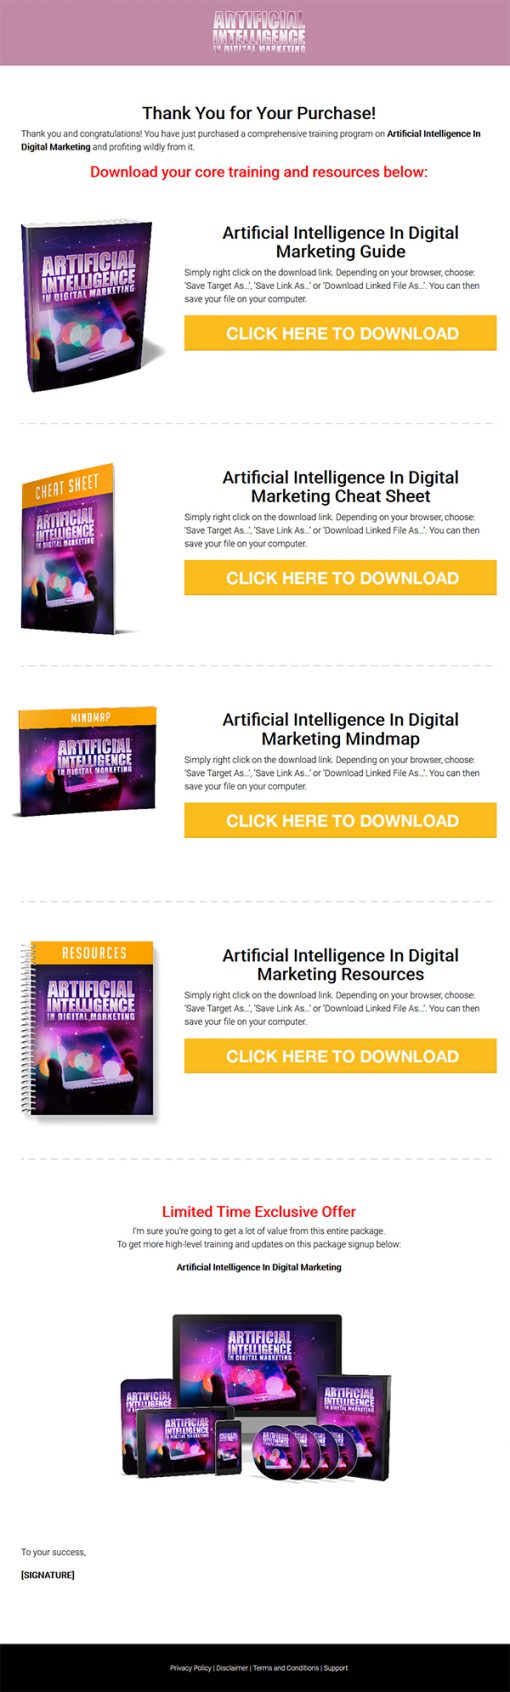 Artificial Intelligence in Digital Marketing Ebook and Videos MRR